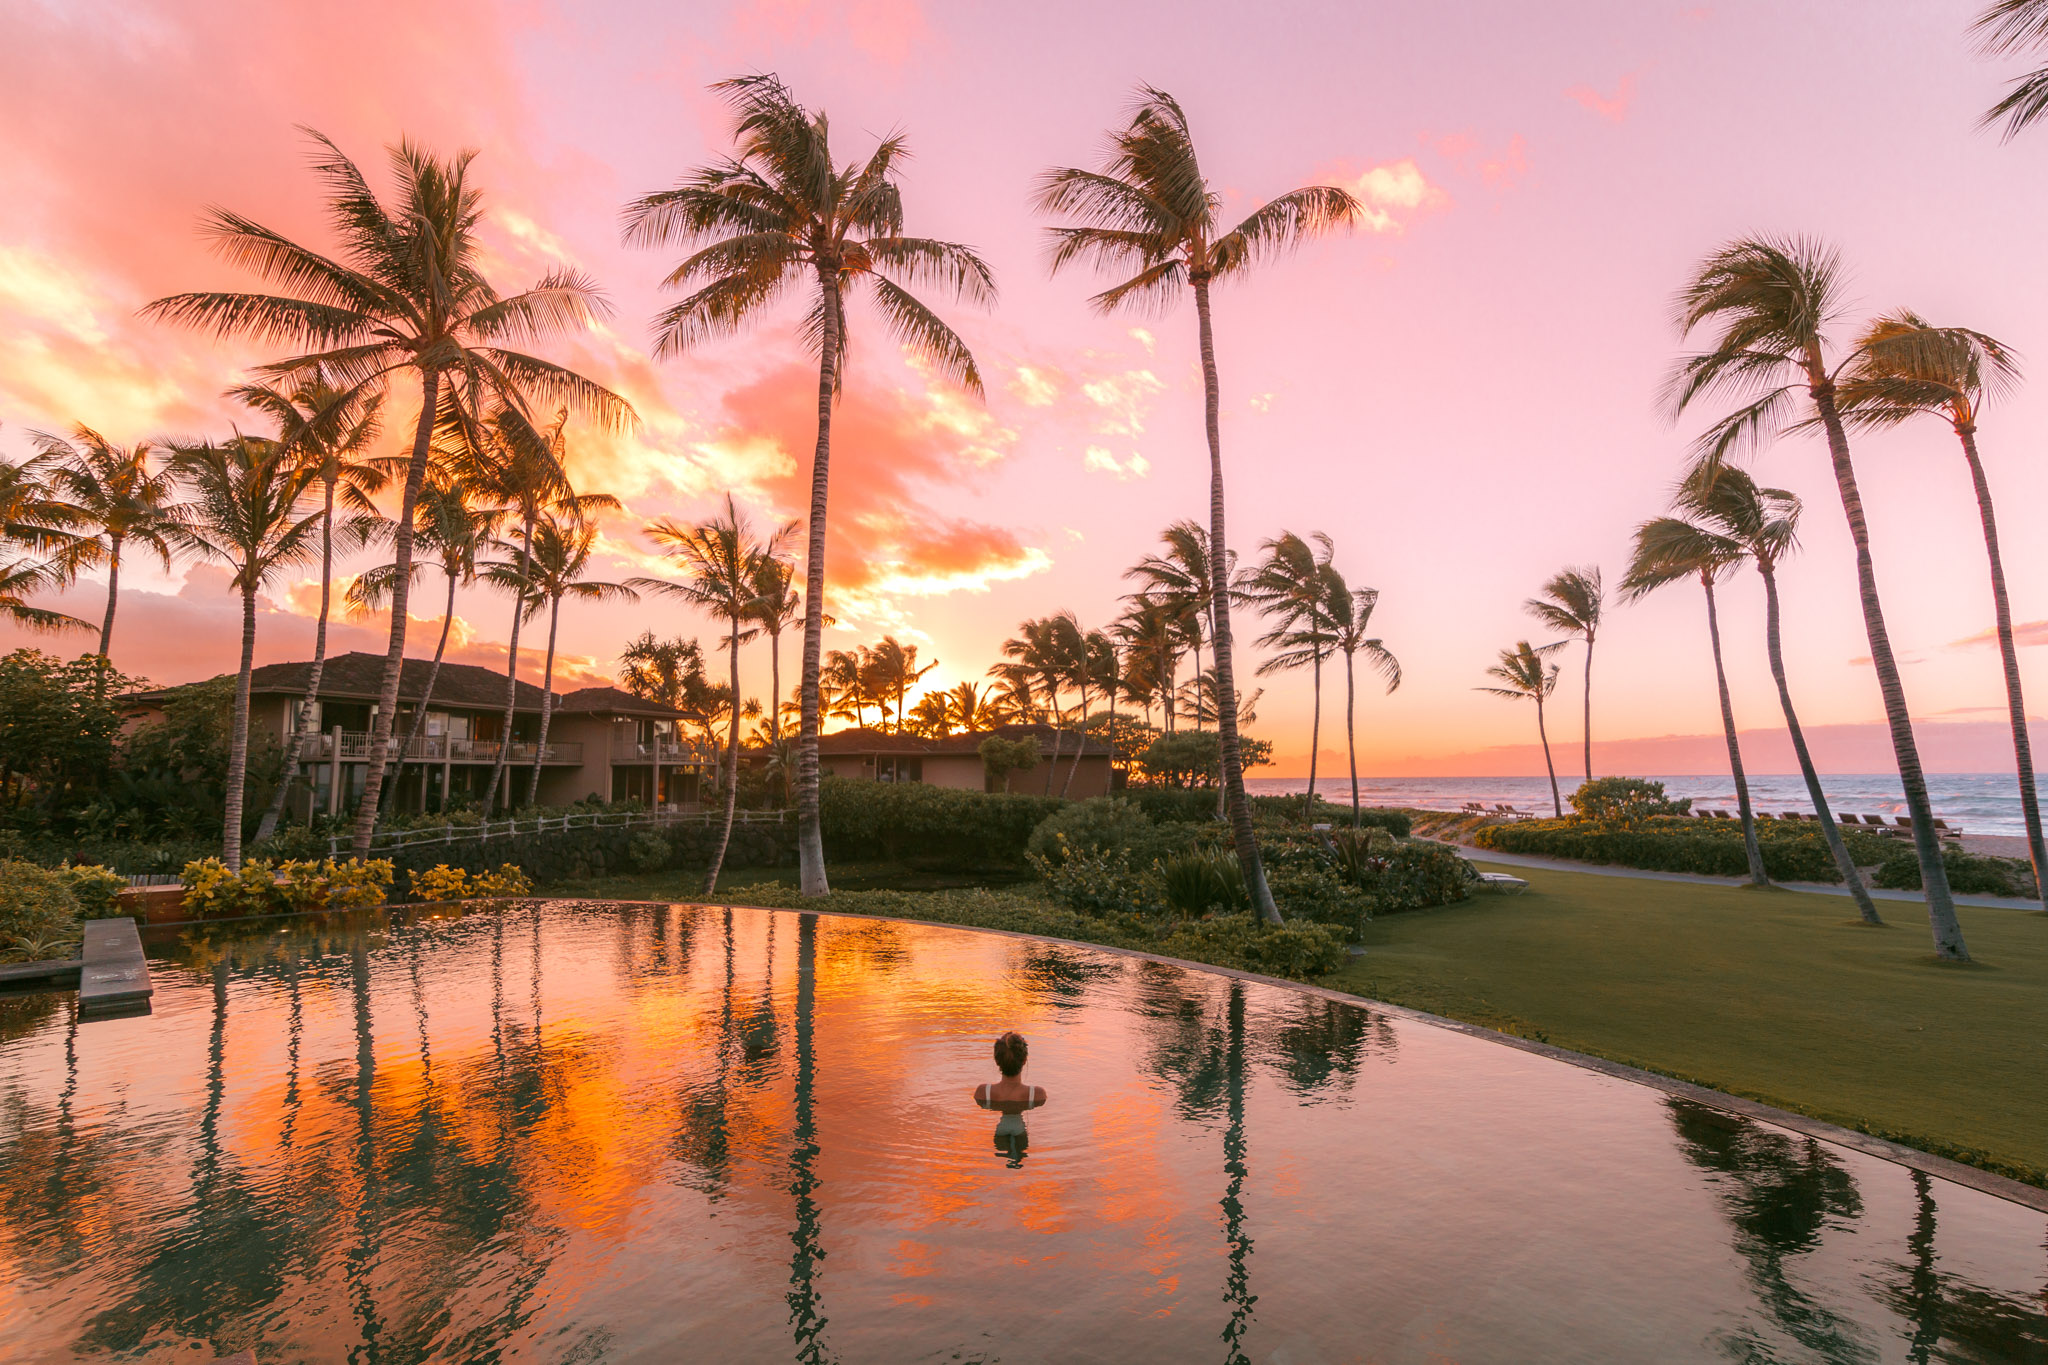 Palm Grove Pool at sunset // A Luxury Stay on the Big Island: Four Seasons Resort Hualalai // #readysetjetset #hawaii #bigisland #luxuryhotels #beachresorts #usa #travel